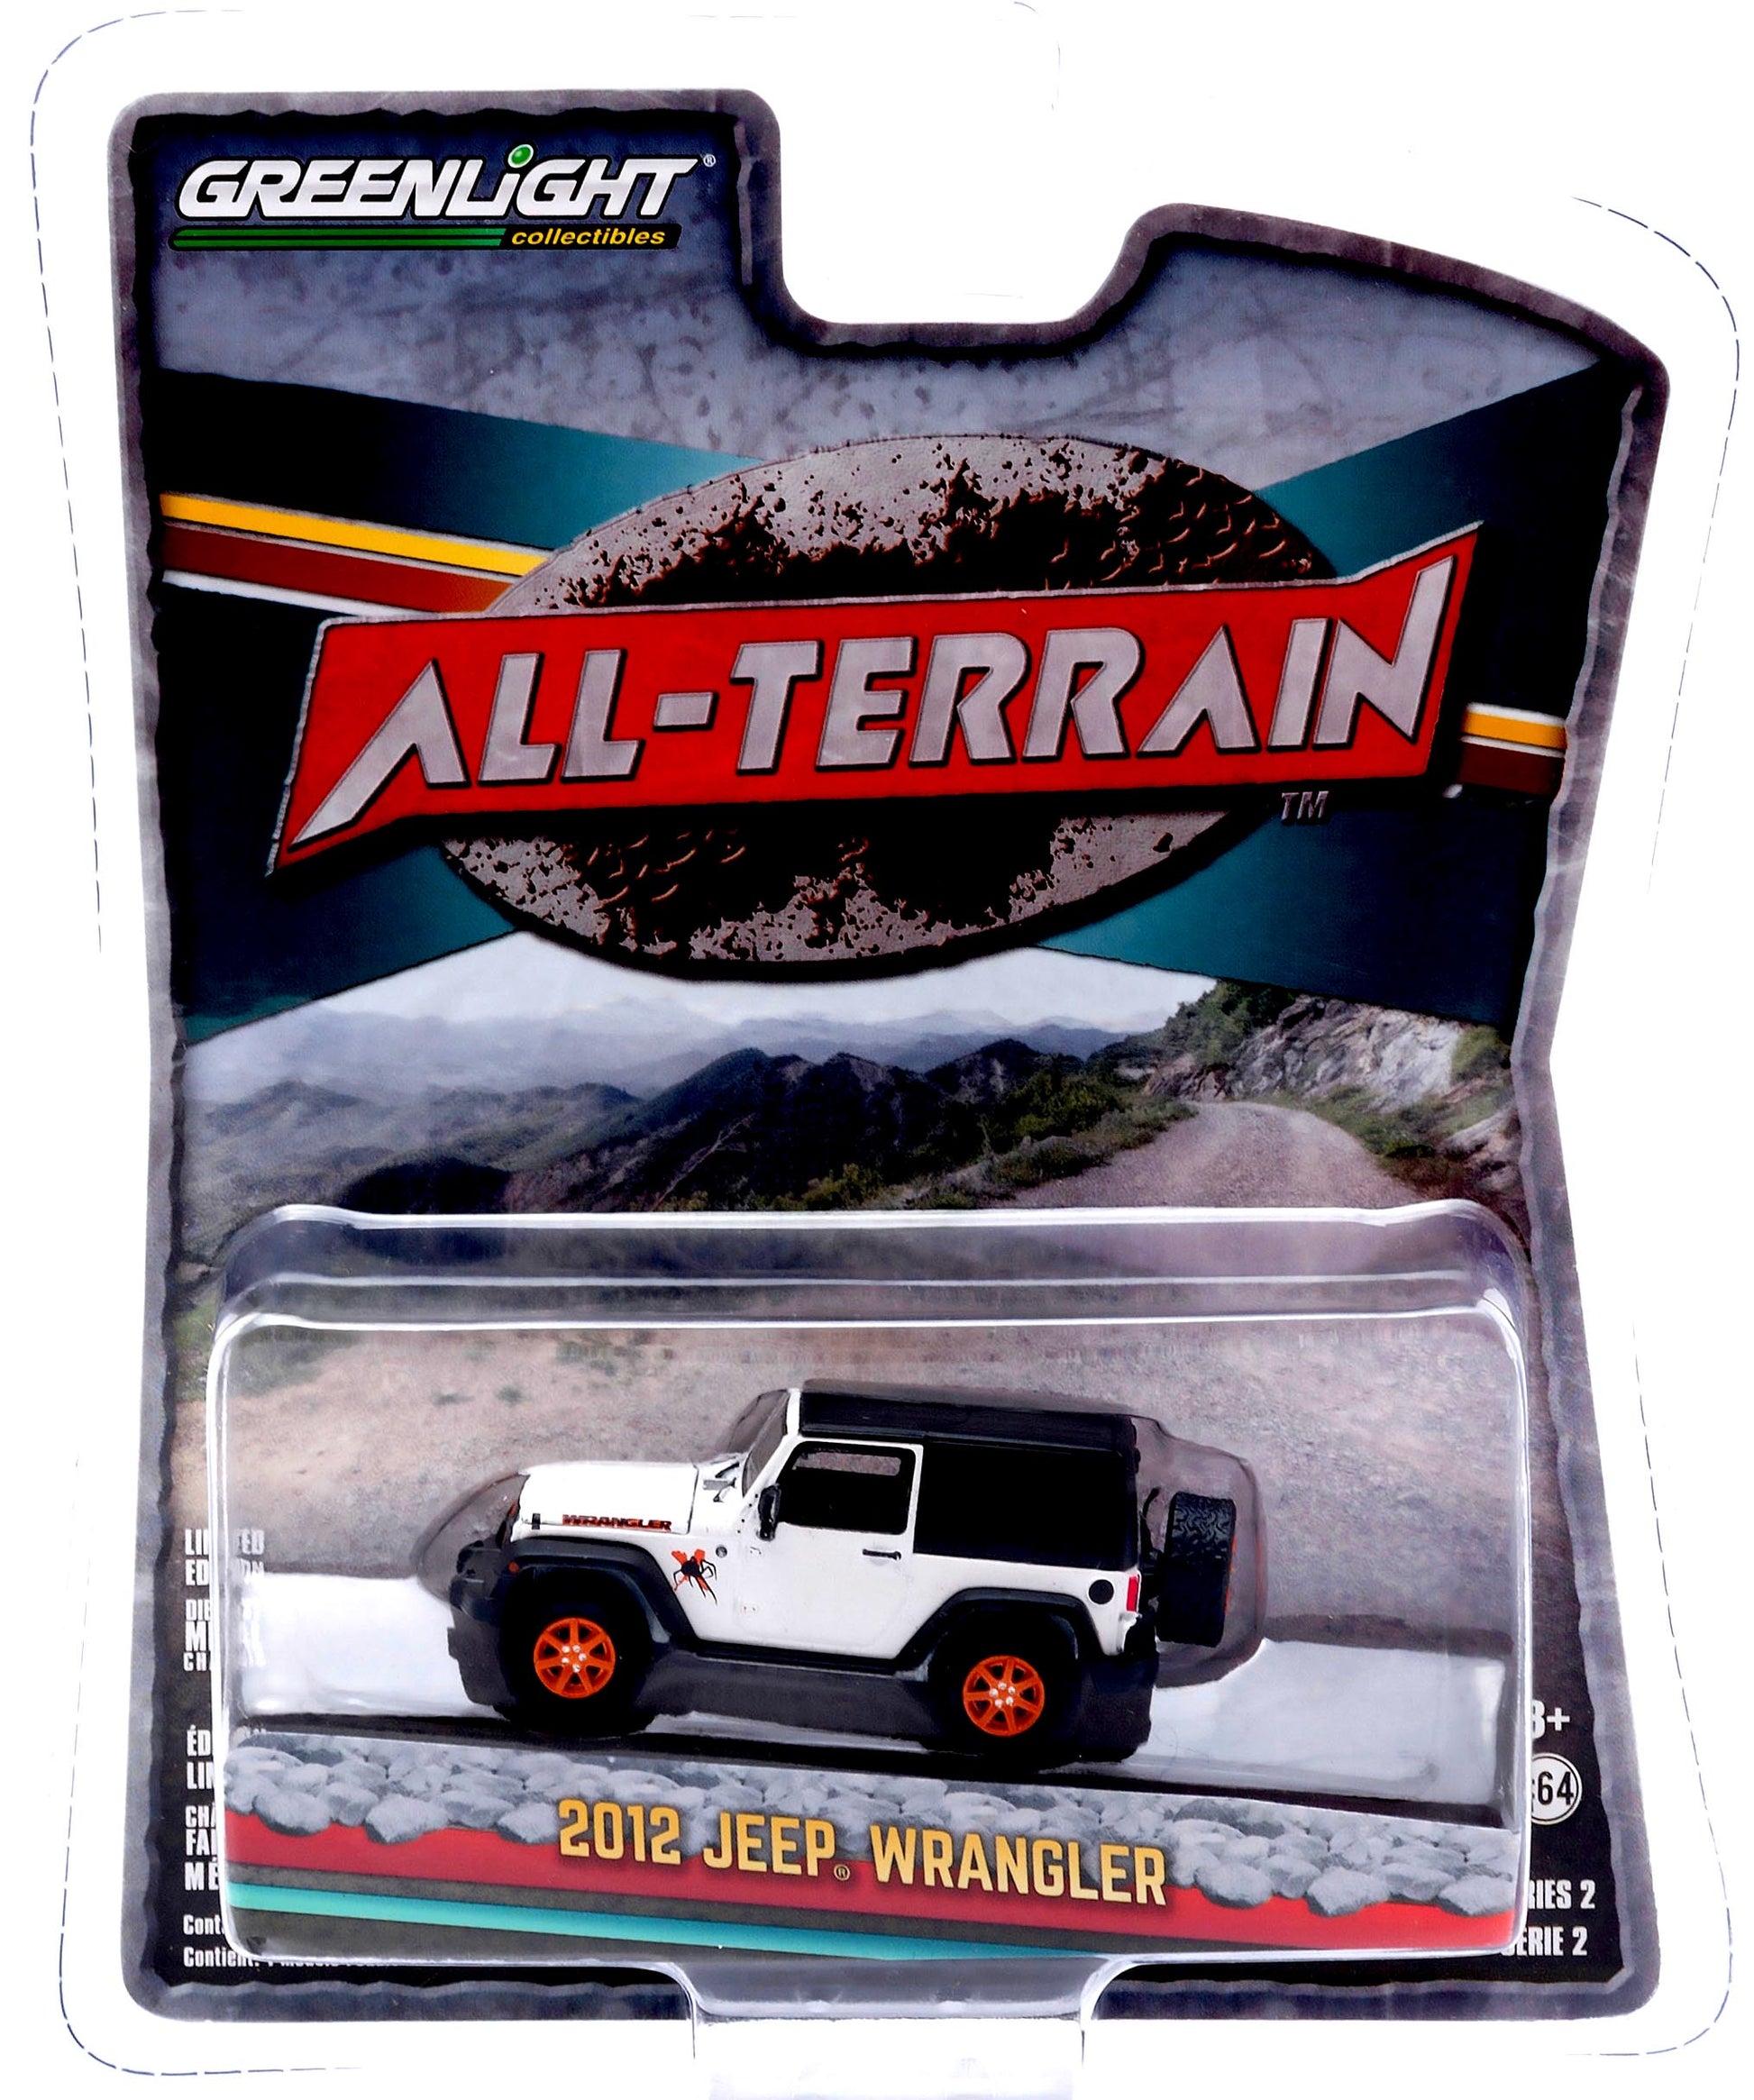 2012 Jeep Wrangler Hard Top (White)